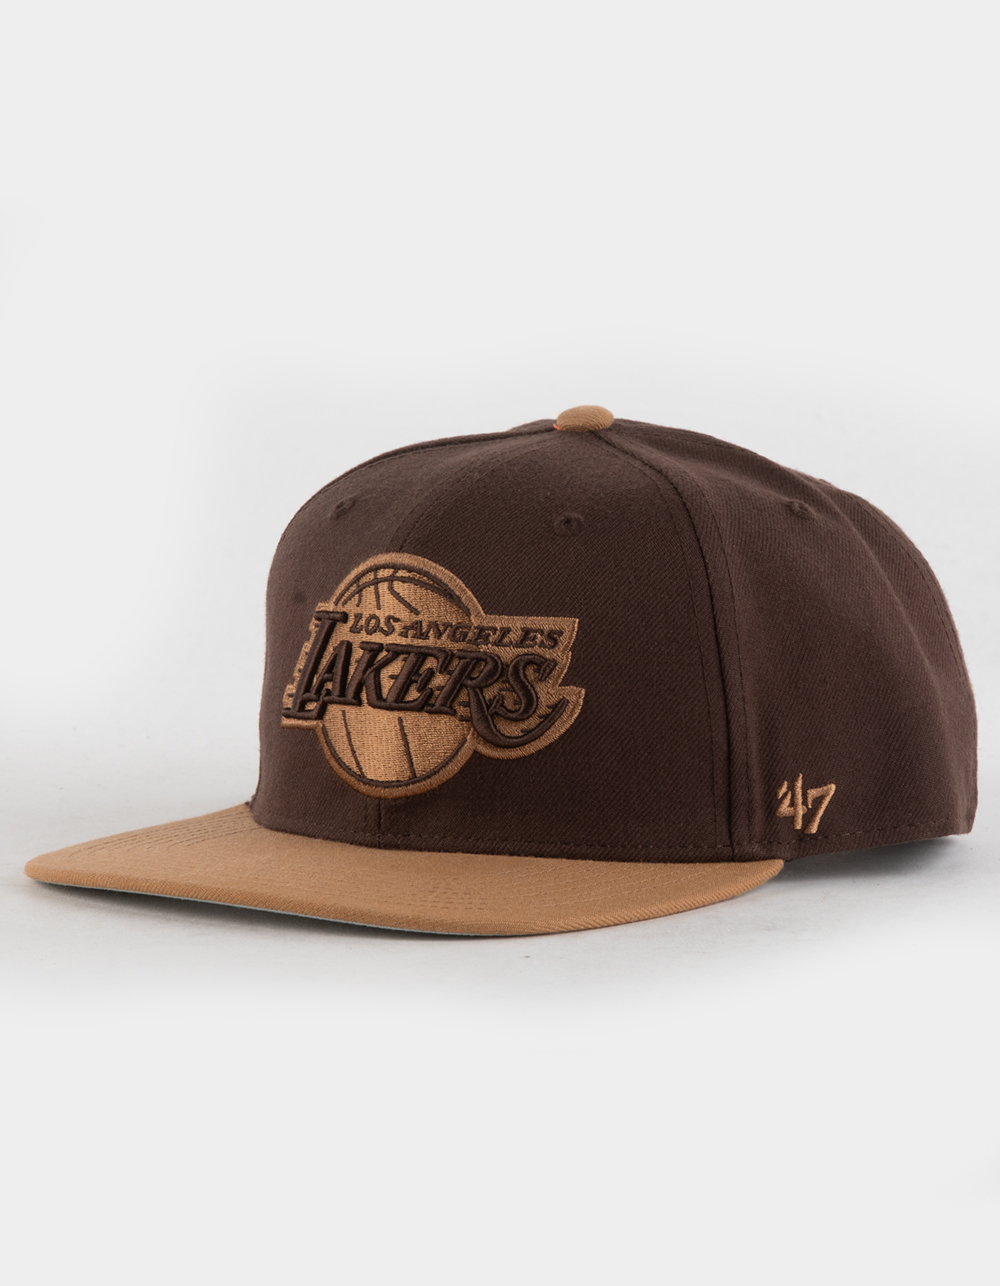 Men's Los Angeles Lakers '47 Tan Toffee Captain Snapback Hat